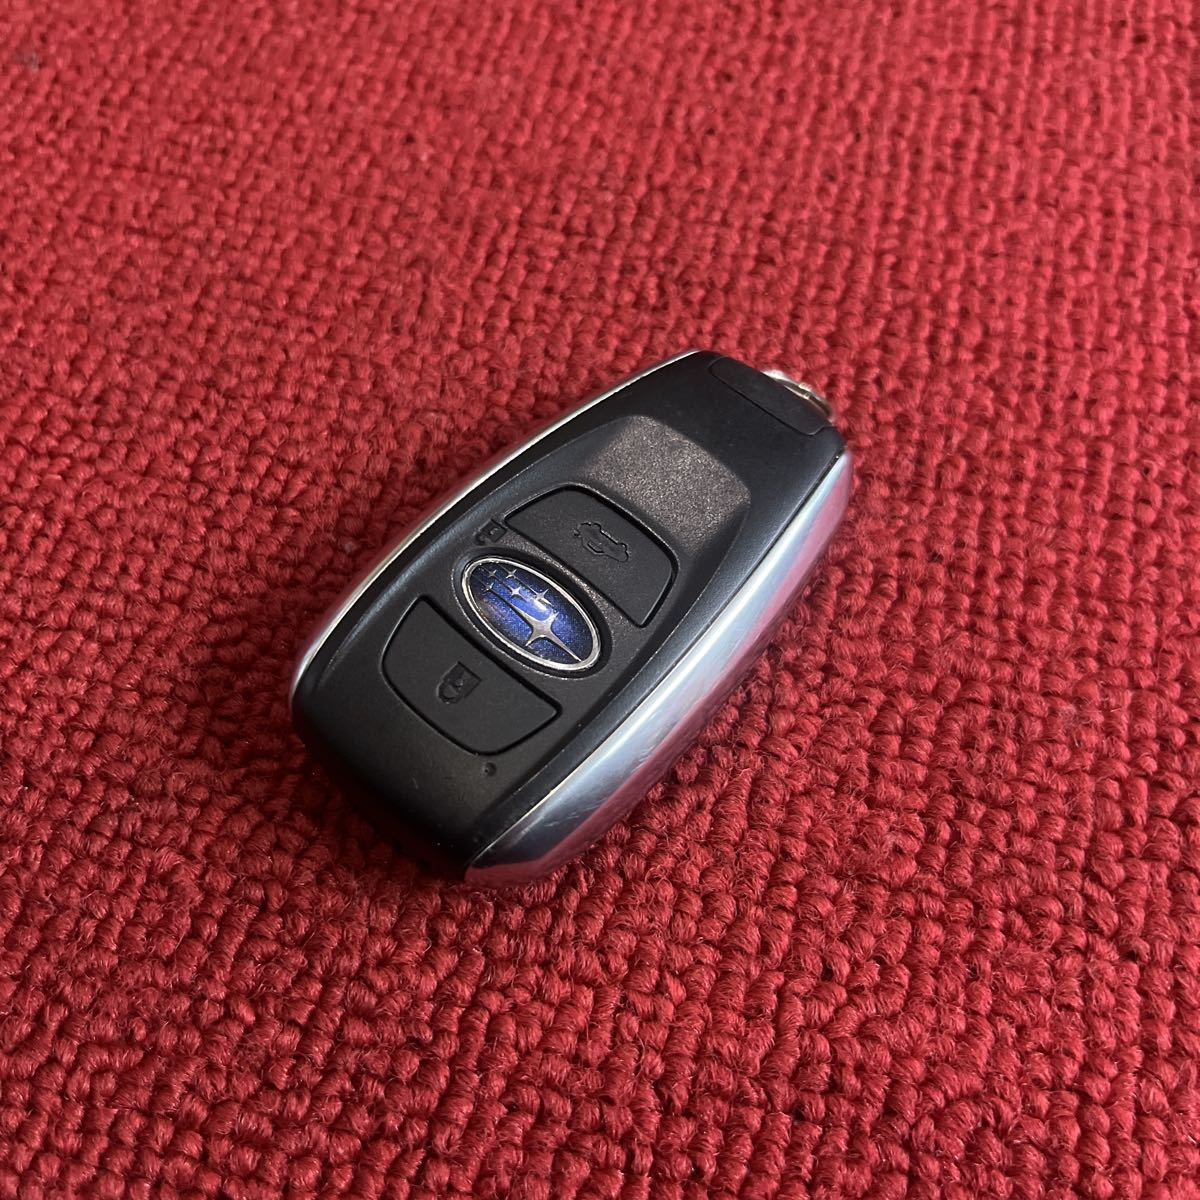  Subaru Levorg SJ Forester original smart key less remote control 3 button 281451-5801 operation has been confirmed .AB141